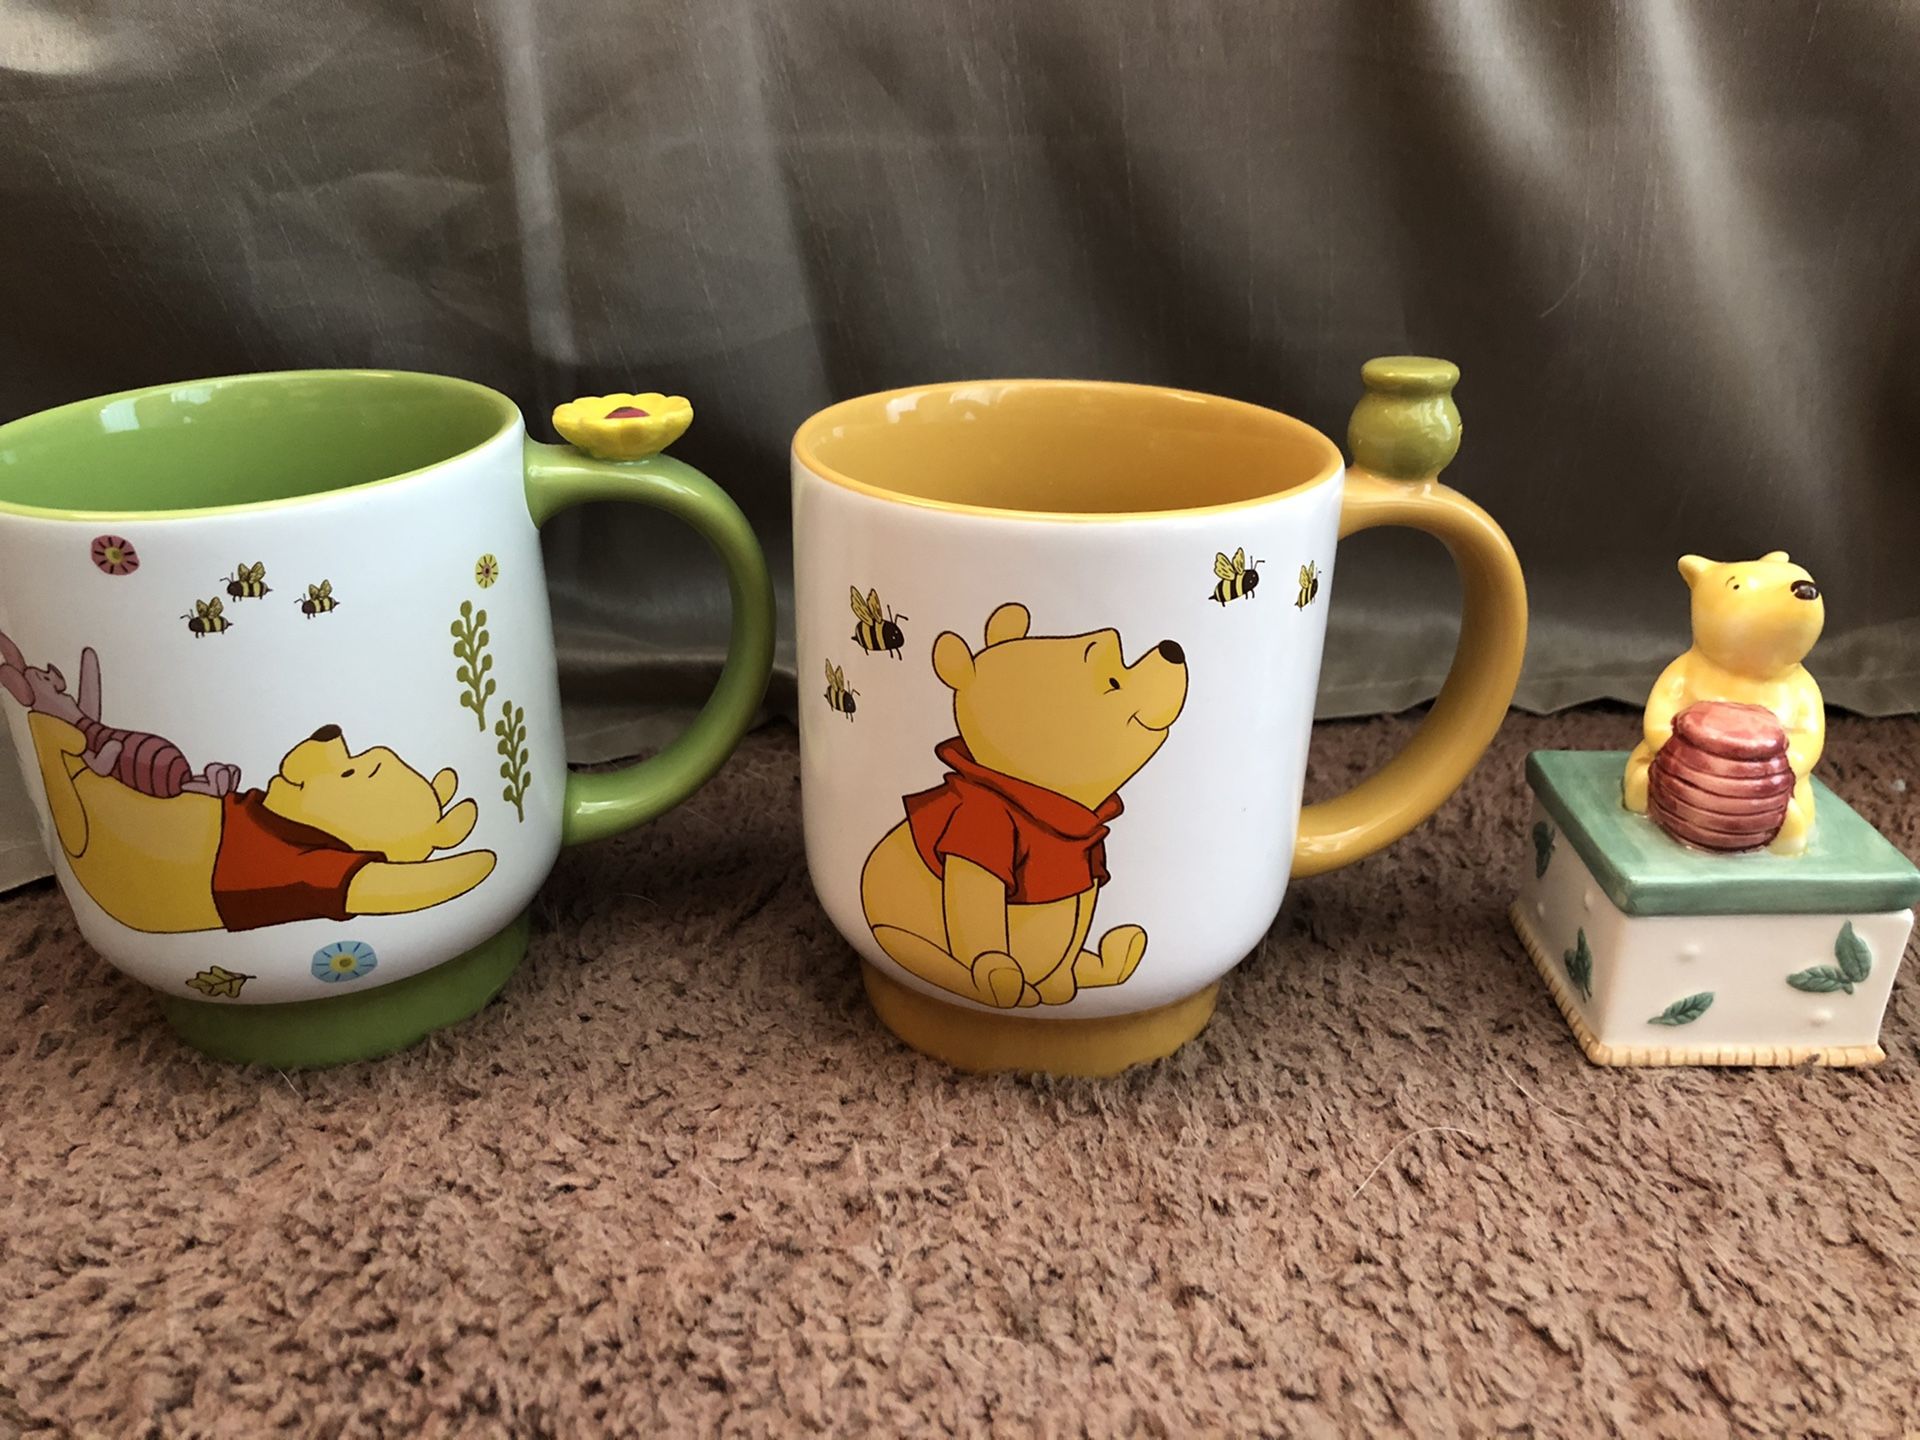 Winnie the Pooh decor & ceramic mugs